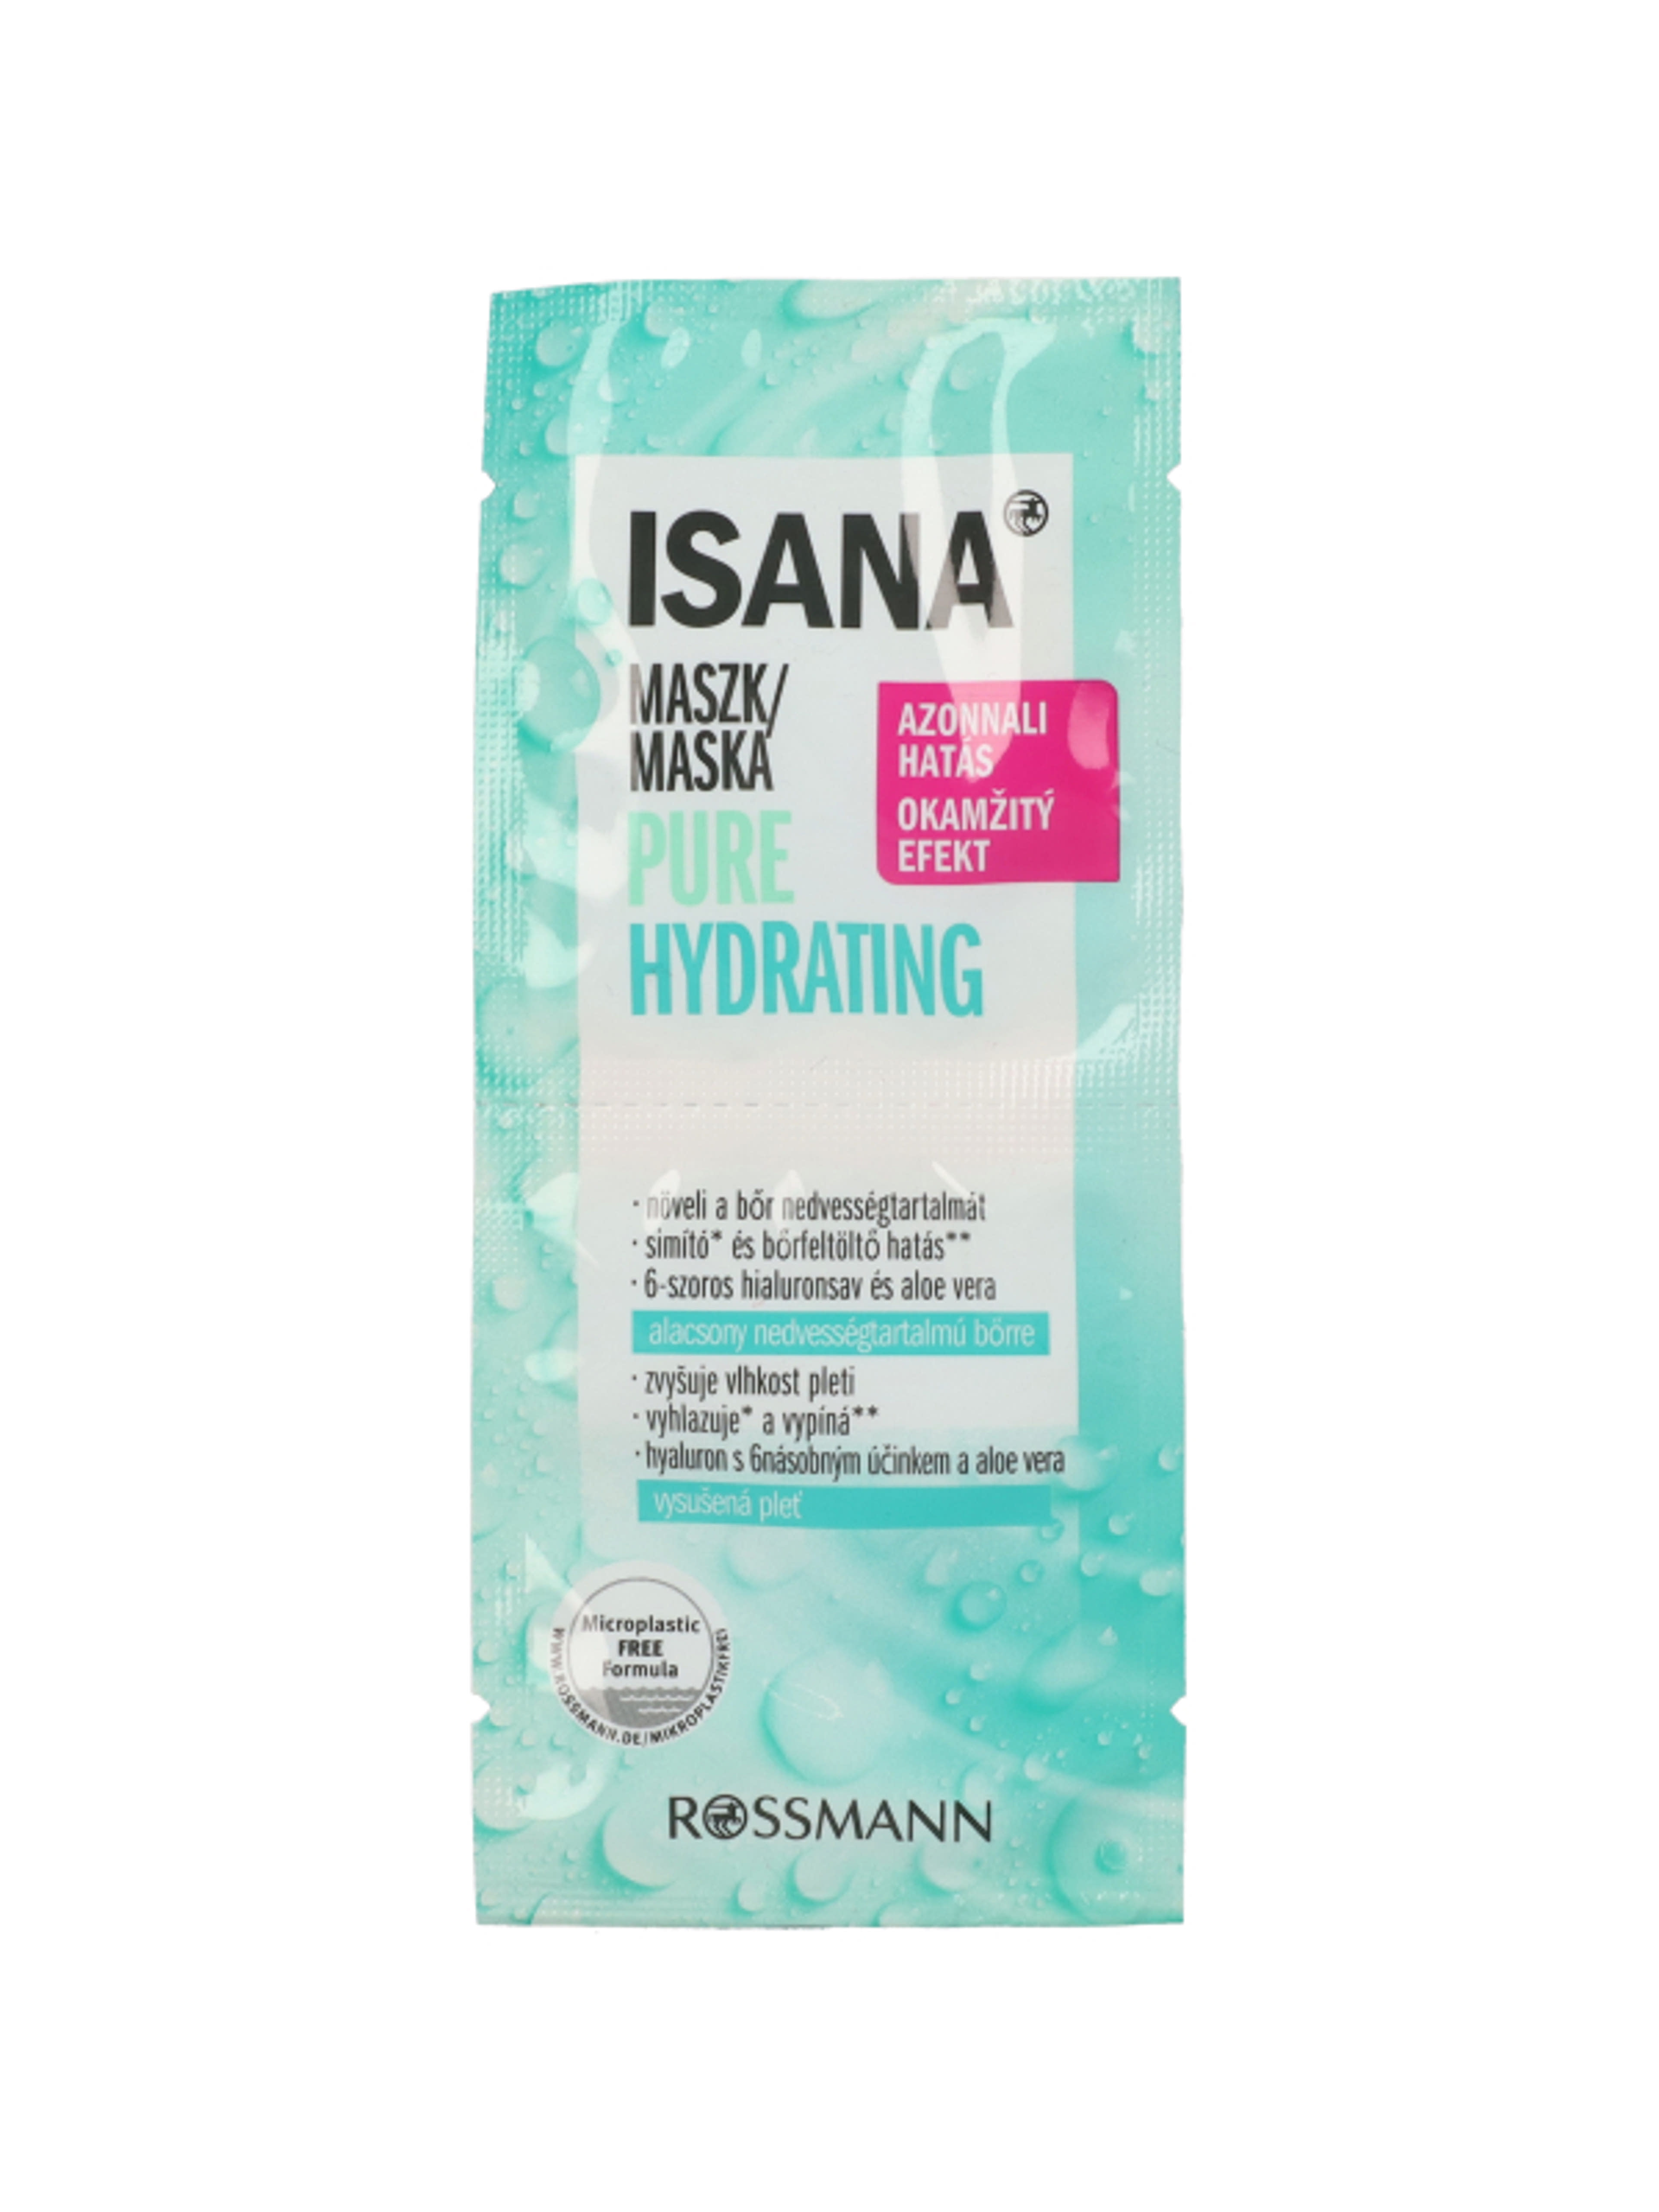 Isana Pure Hydrating maszk 2x8 ml - 16 ml-1